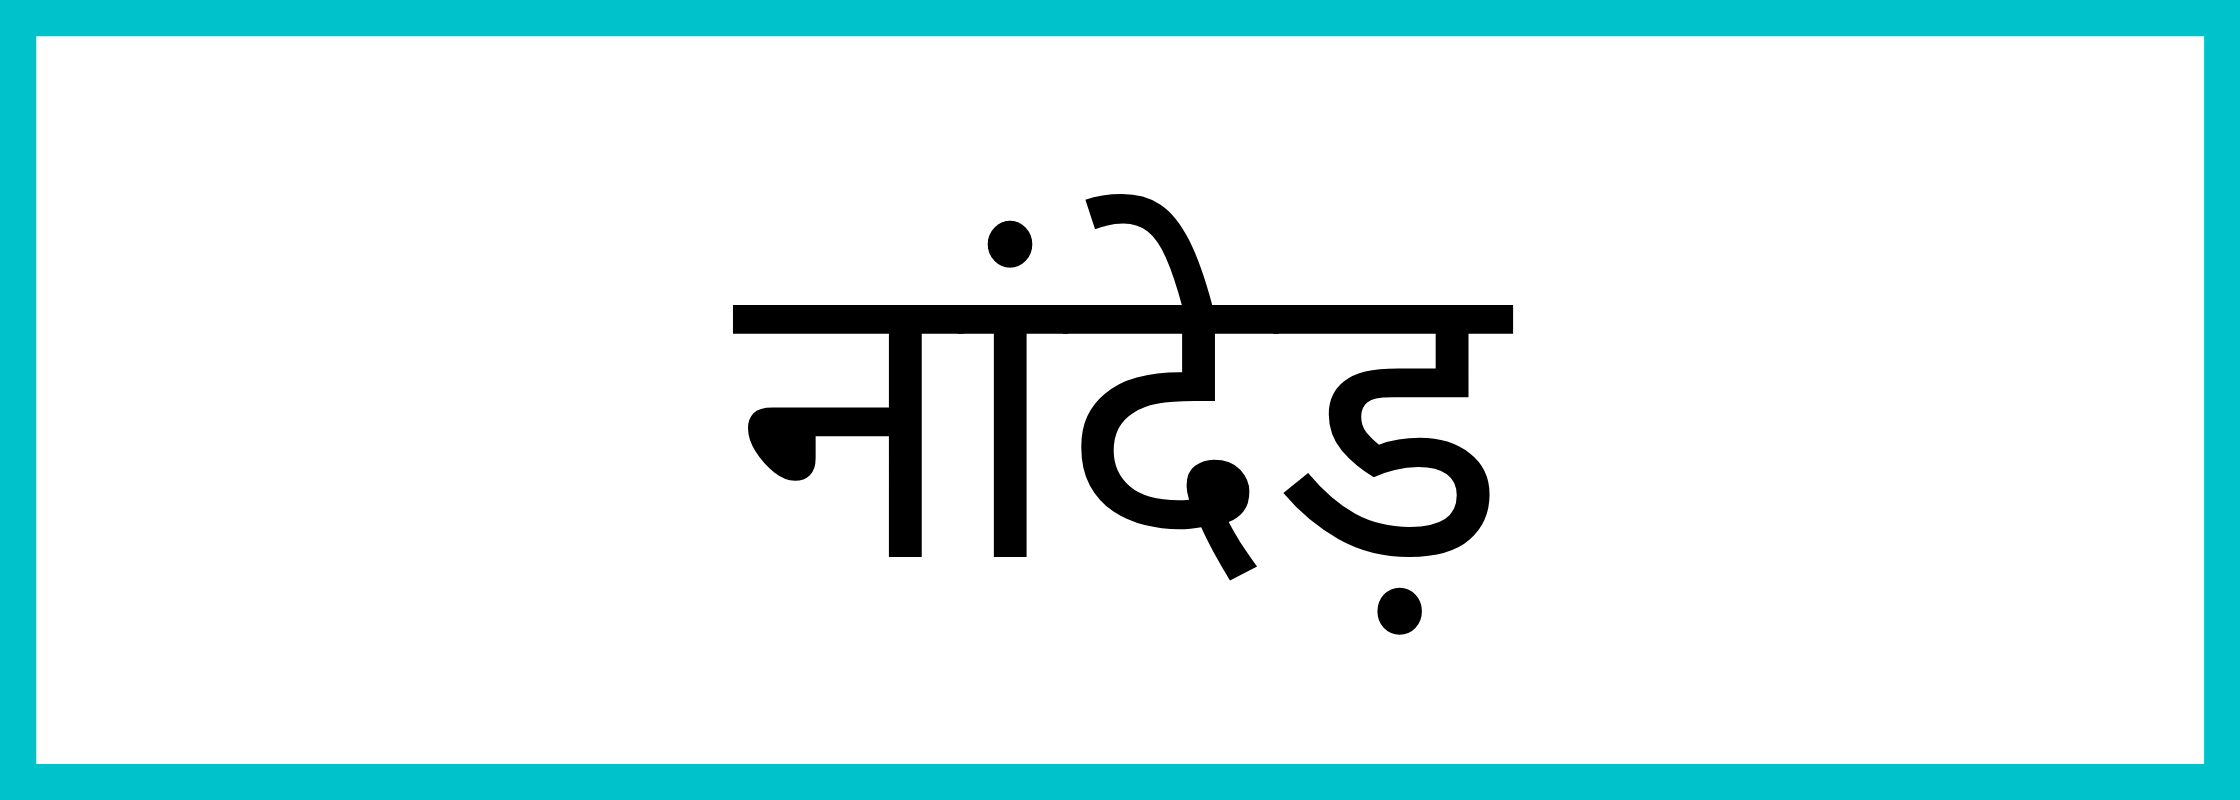 नांदेड़
-Nanded-mandi-bhav